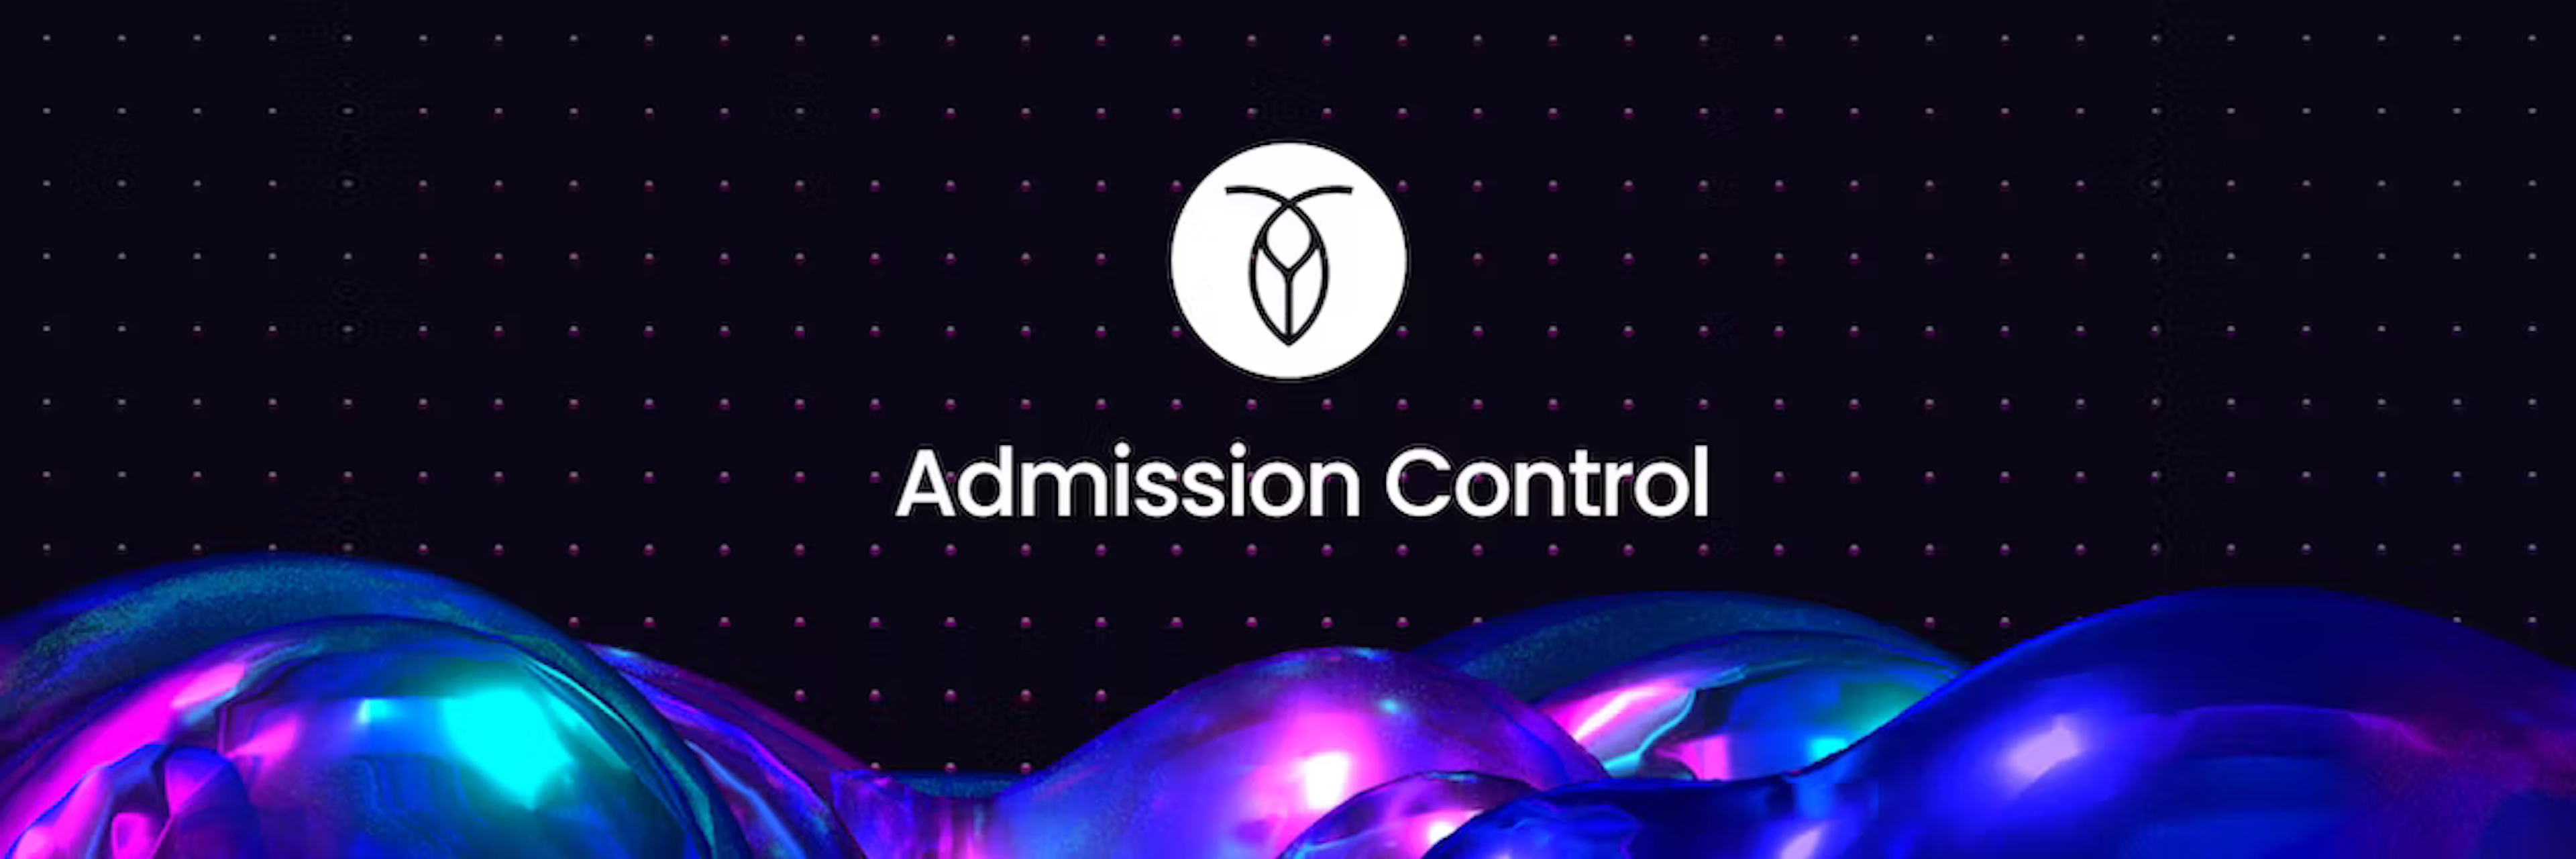 22.1-admission-control (1)